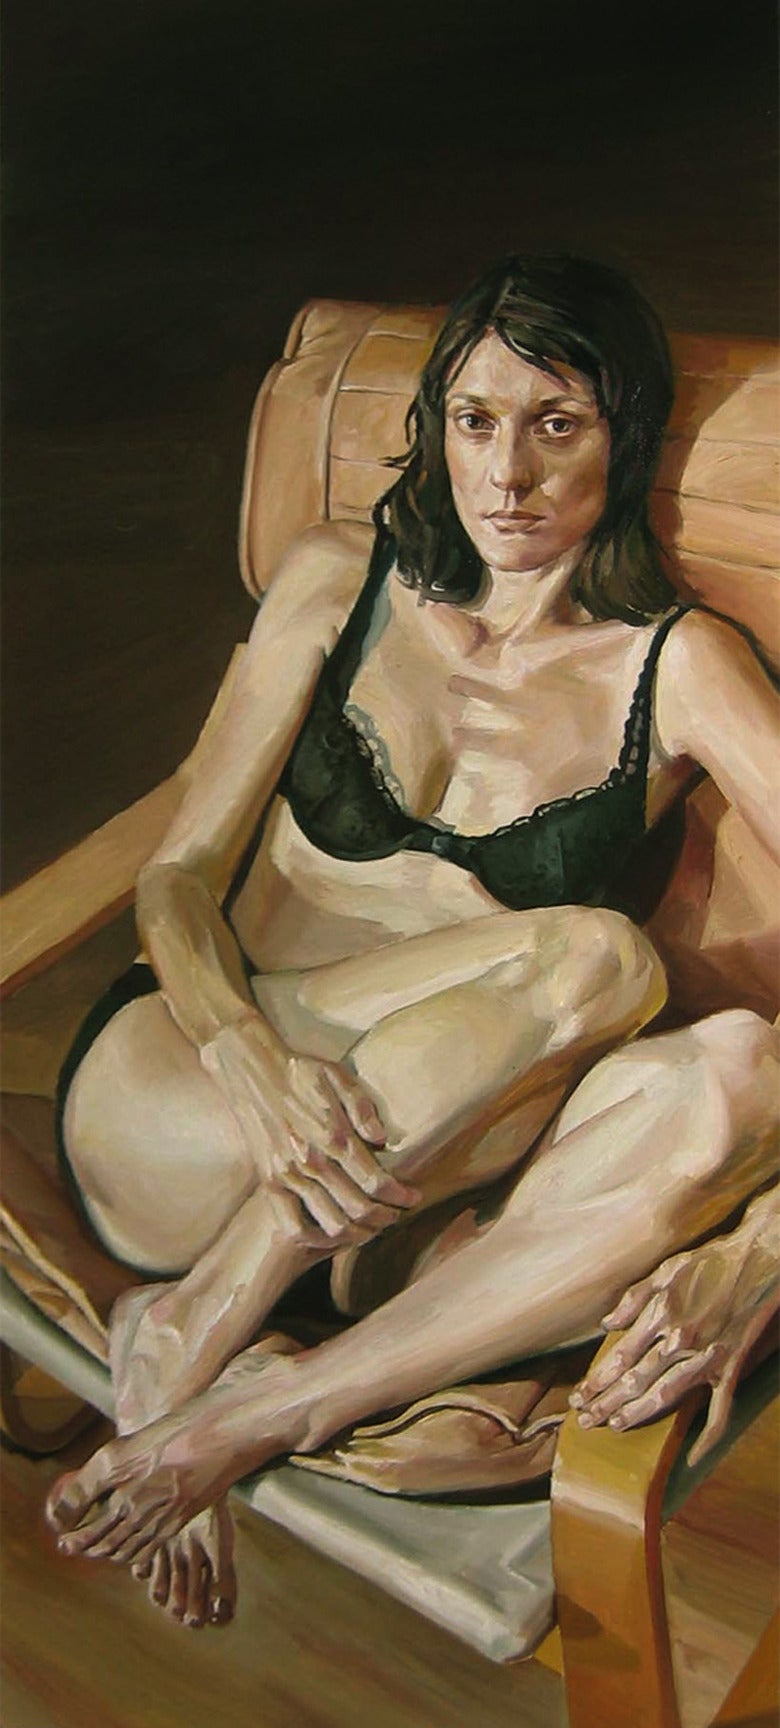 Stephen Wright Figurative Painting - PORTRAIT OF KEM IN A BLACK BRA - Contemporary Realism / Figurative Art / Female